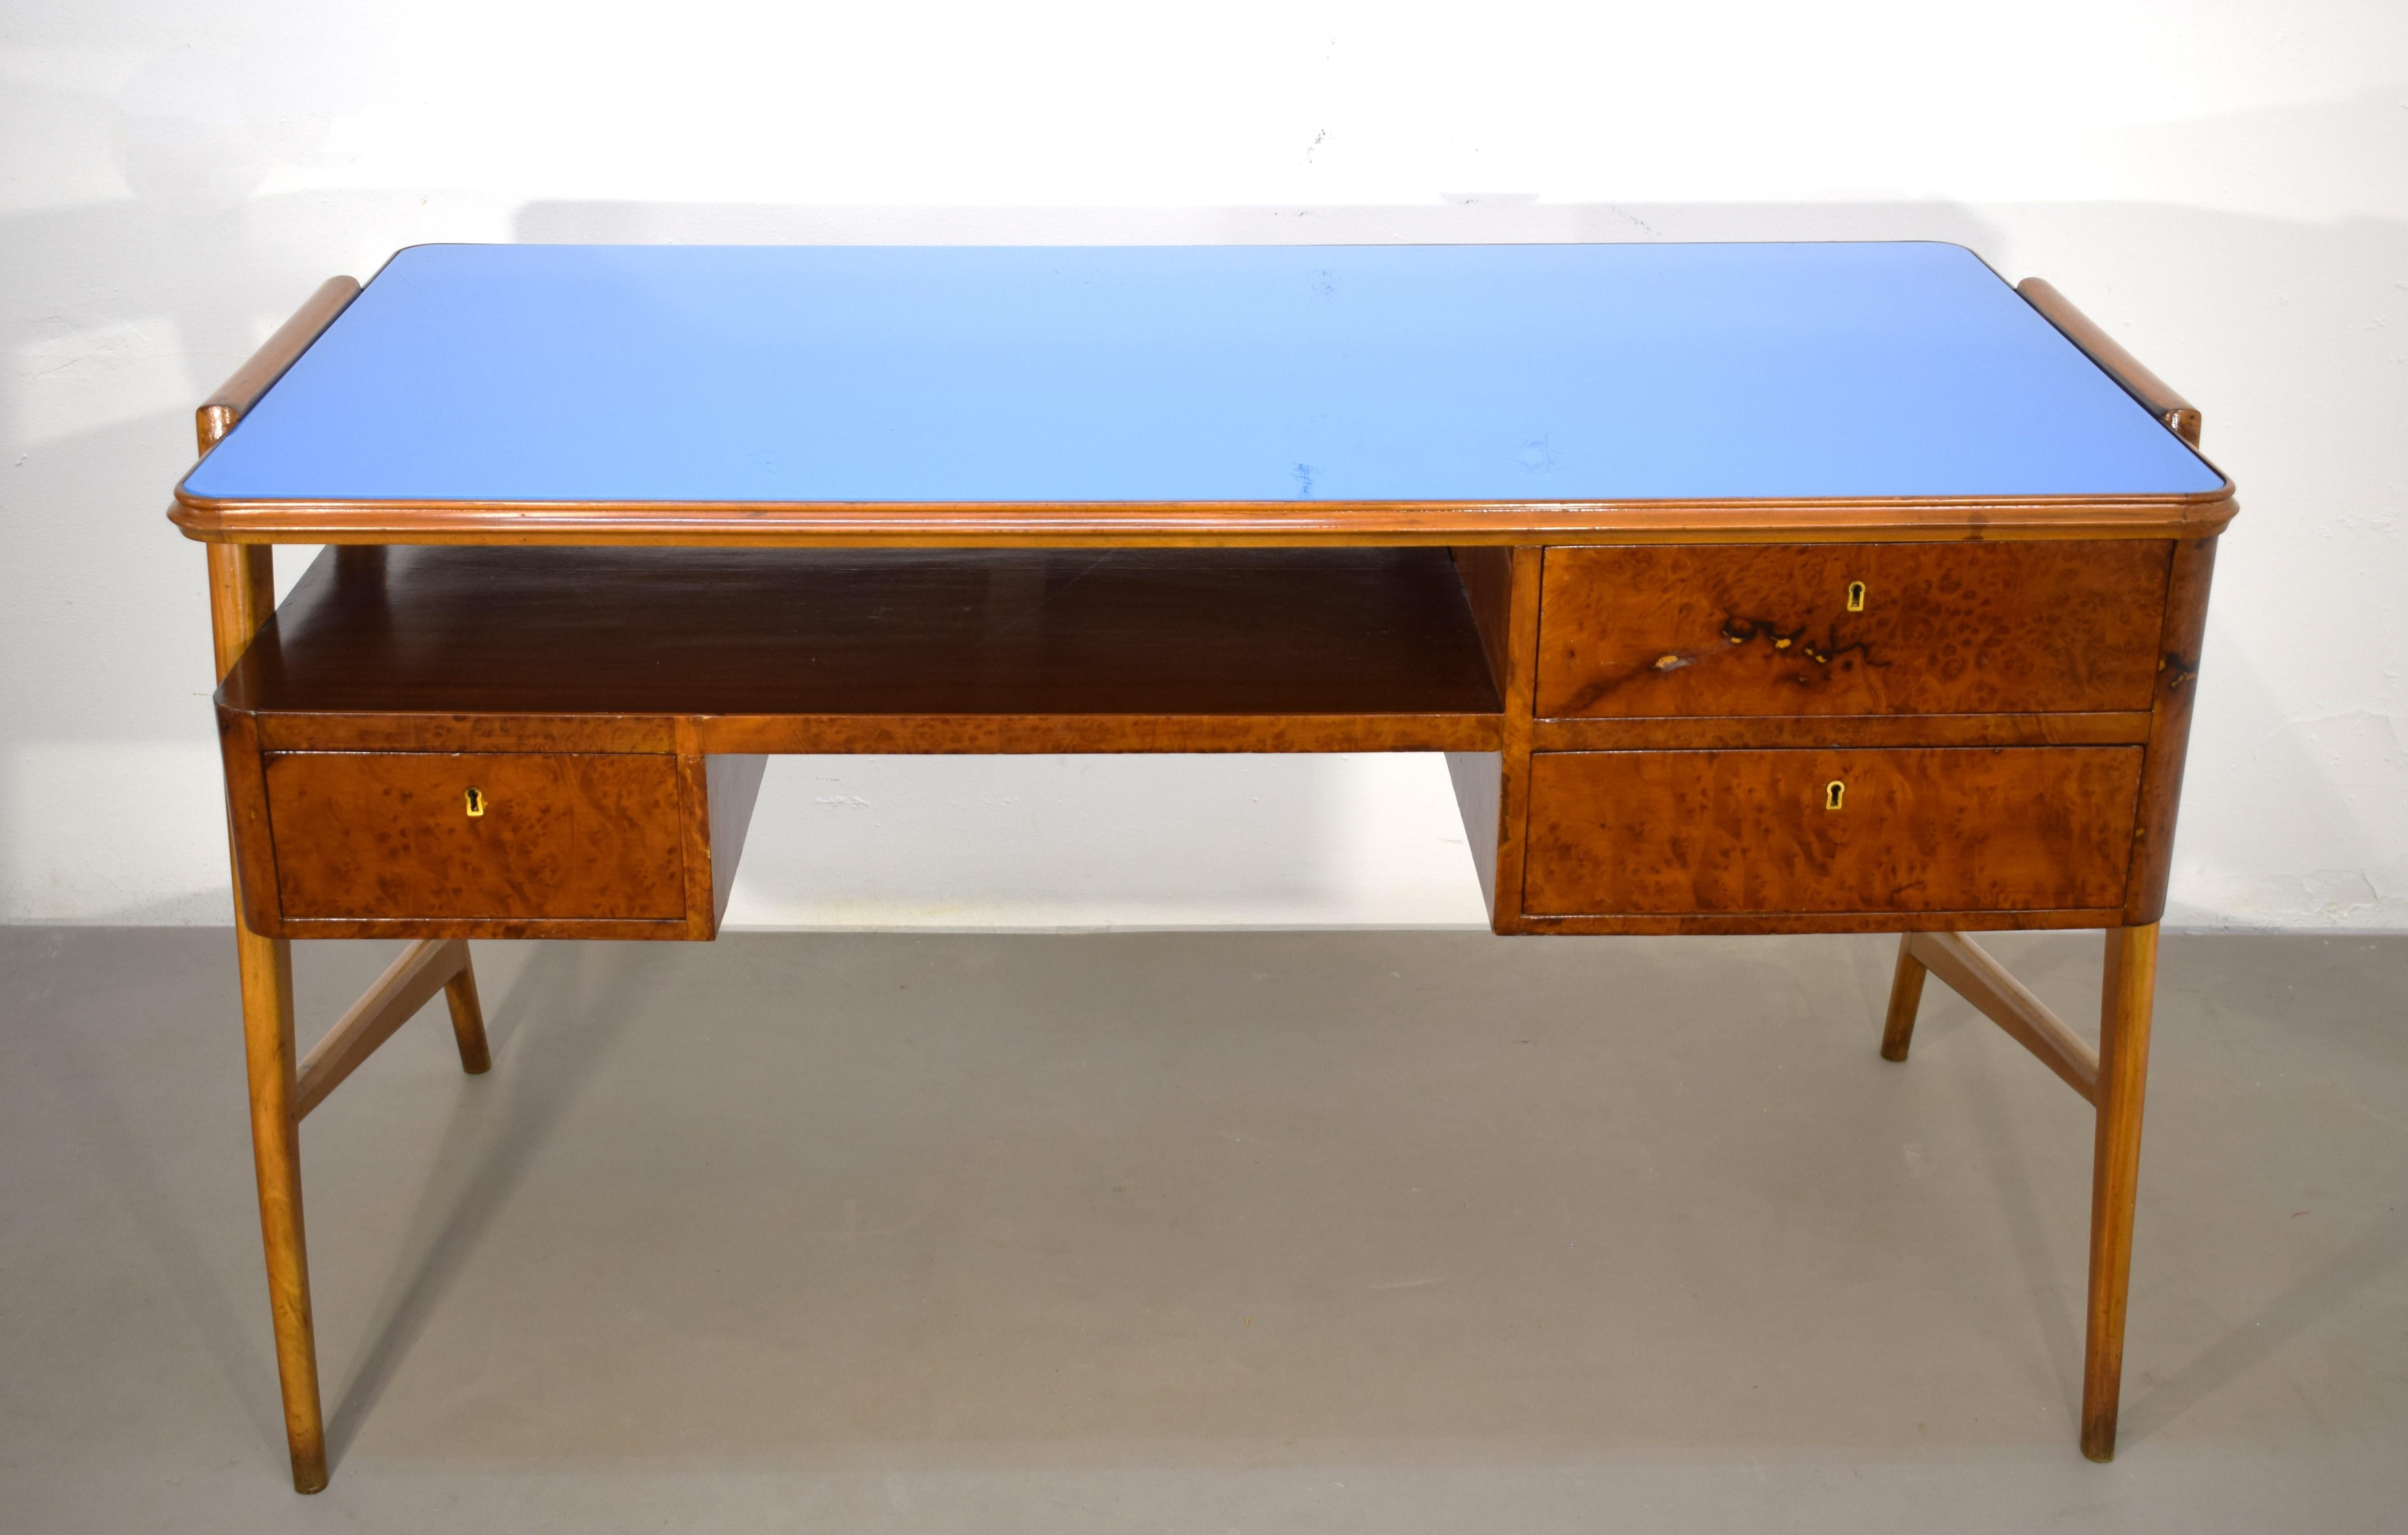 Italian desk, wood and colored glass, 1950s.
Dimensions: H= 77 cm; W= 136 cm; D= 68 cm.